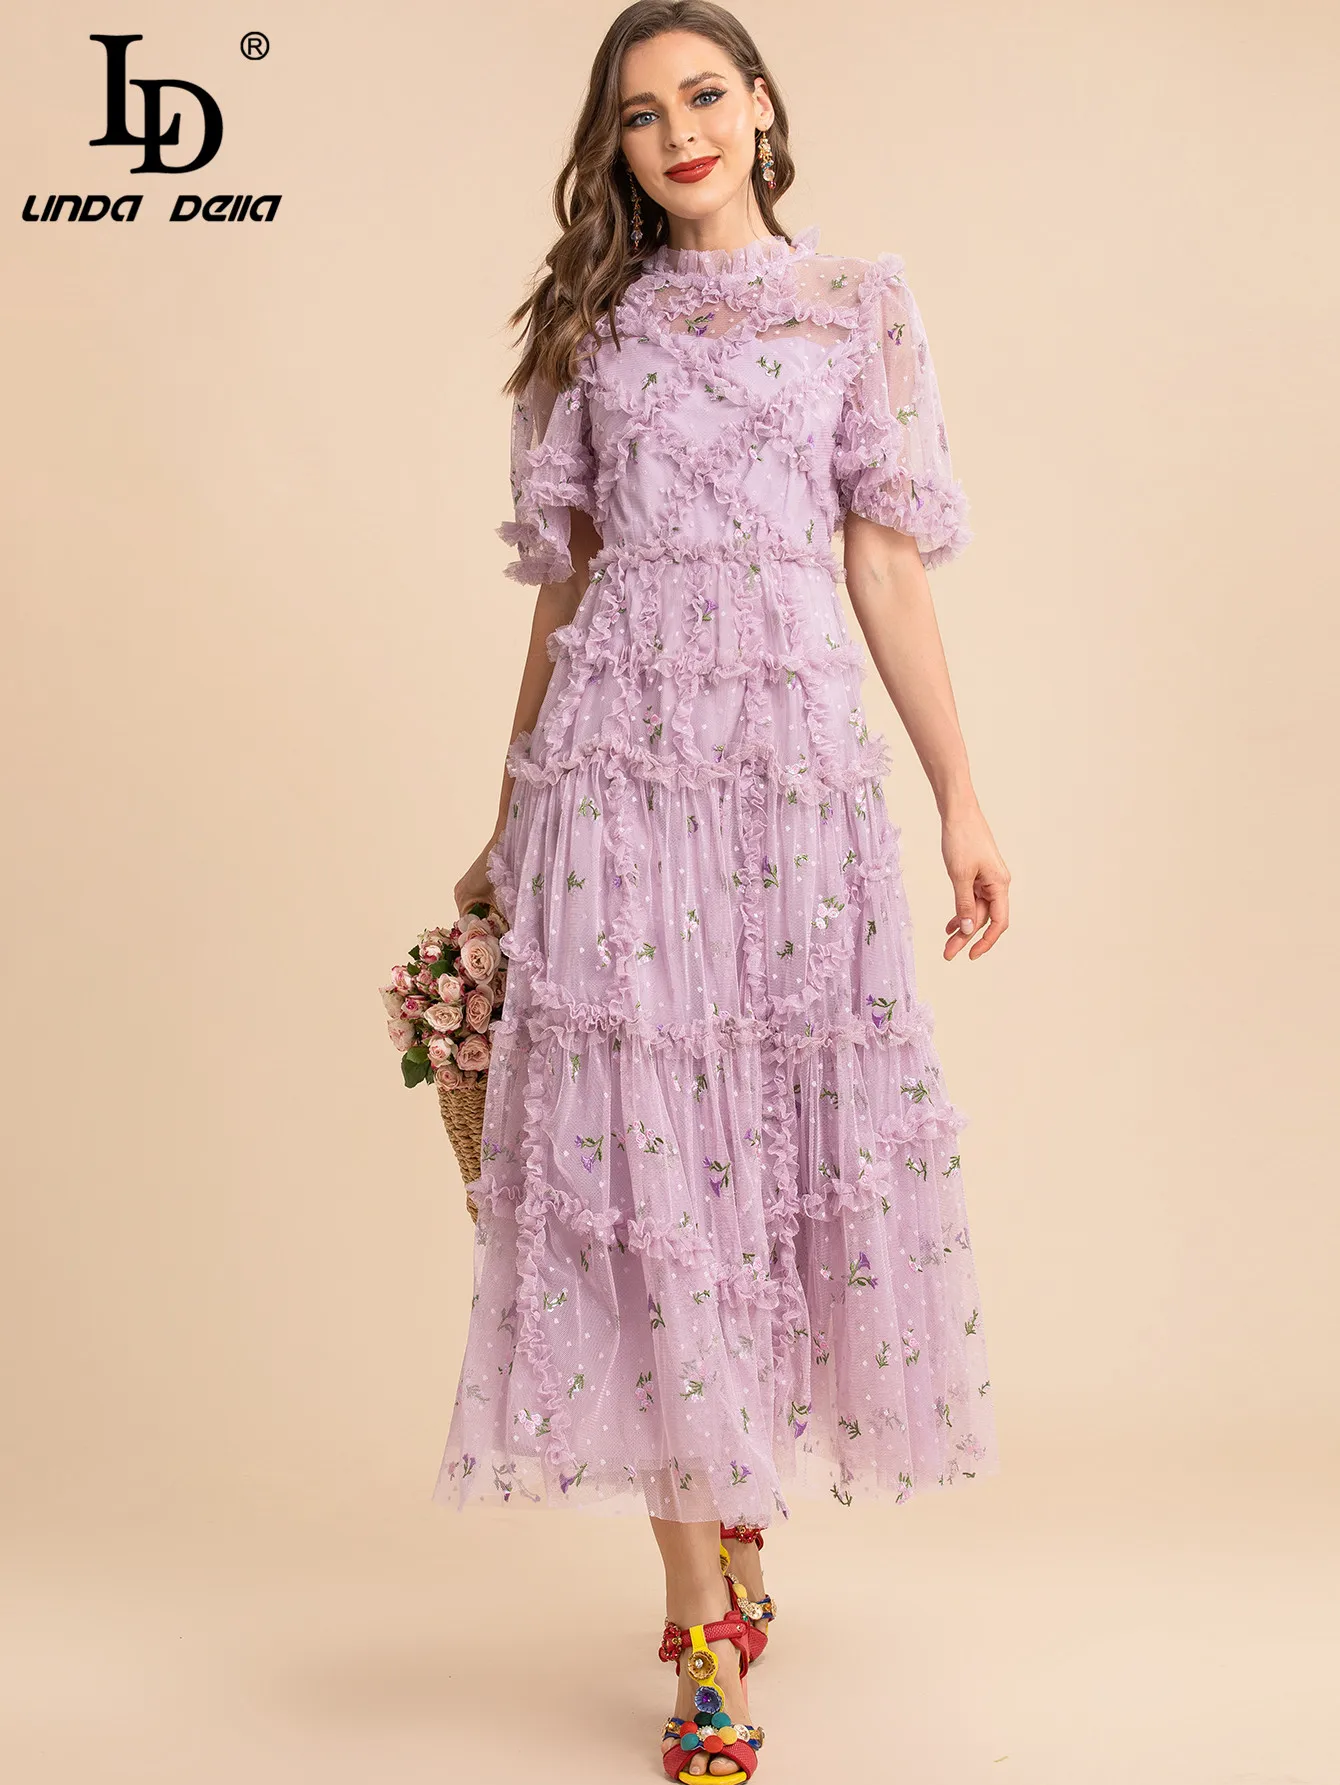 LD LINDA DELLA Designer Summer Long Purple Vacation Dress Women Puff Ruffle Floral Embroidery Dot Mesh Elegant Party Dress